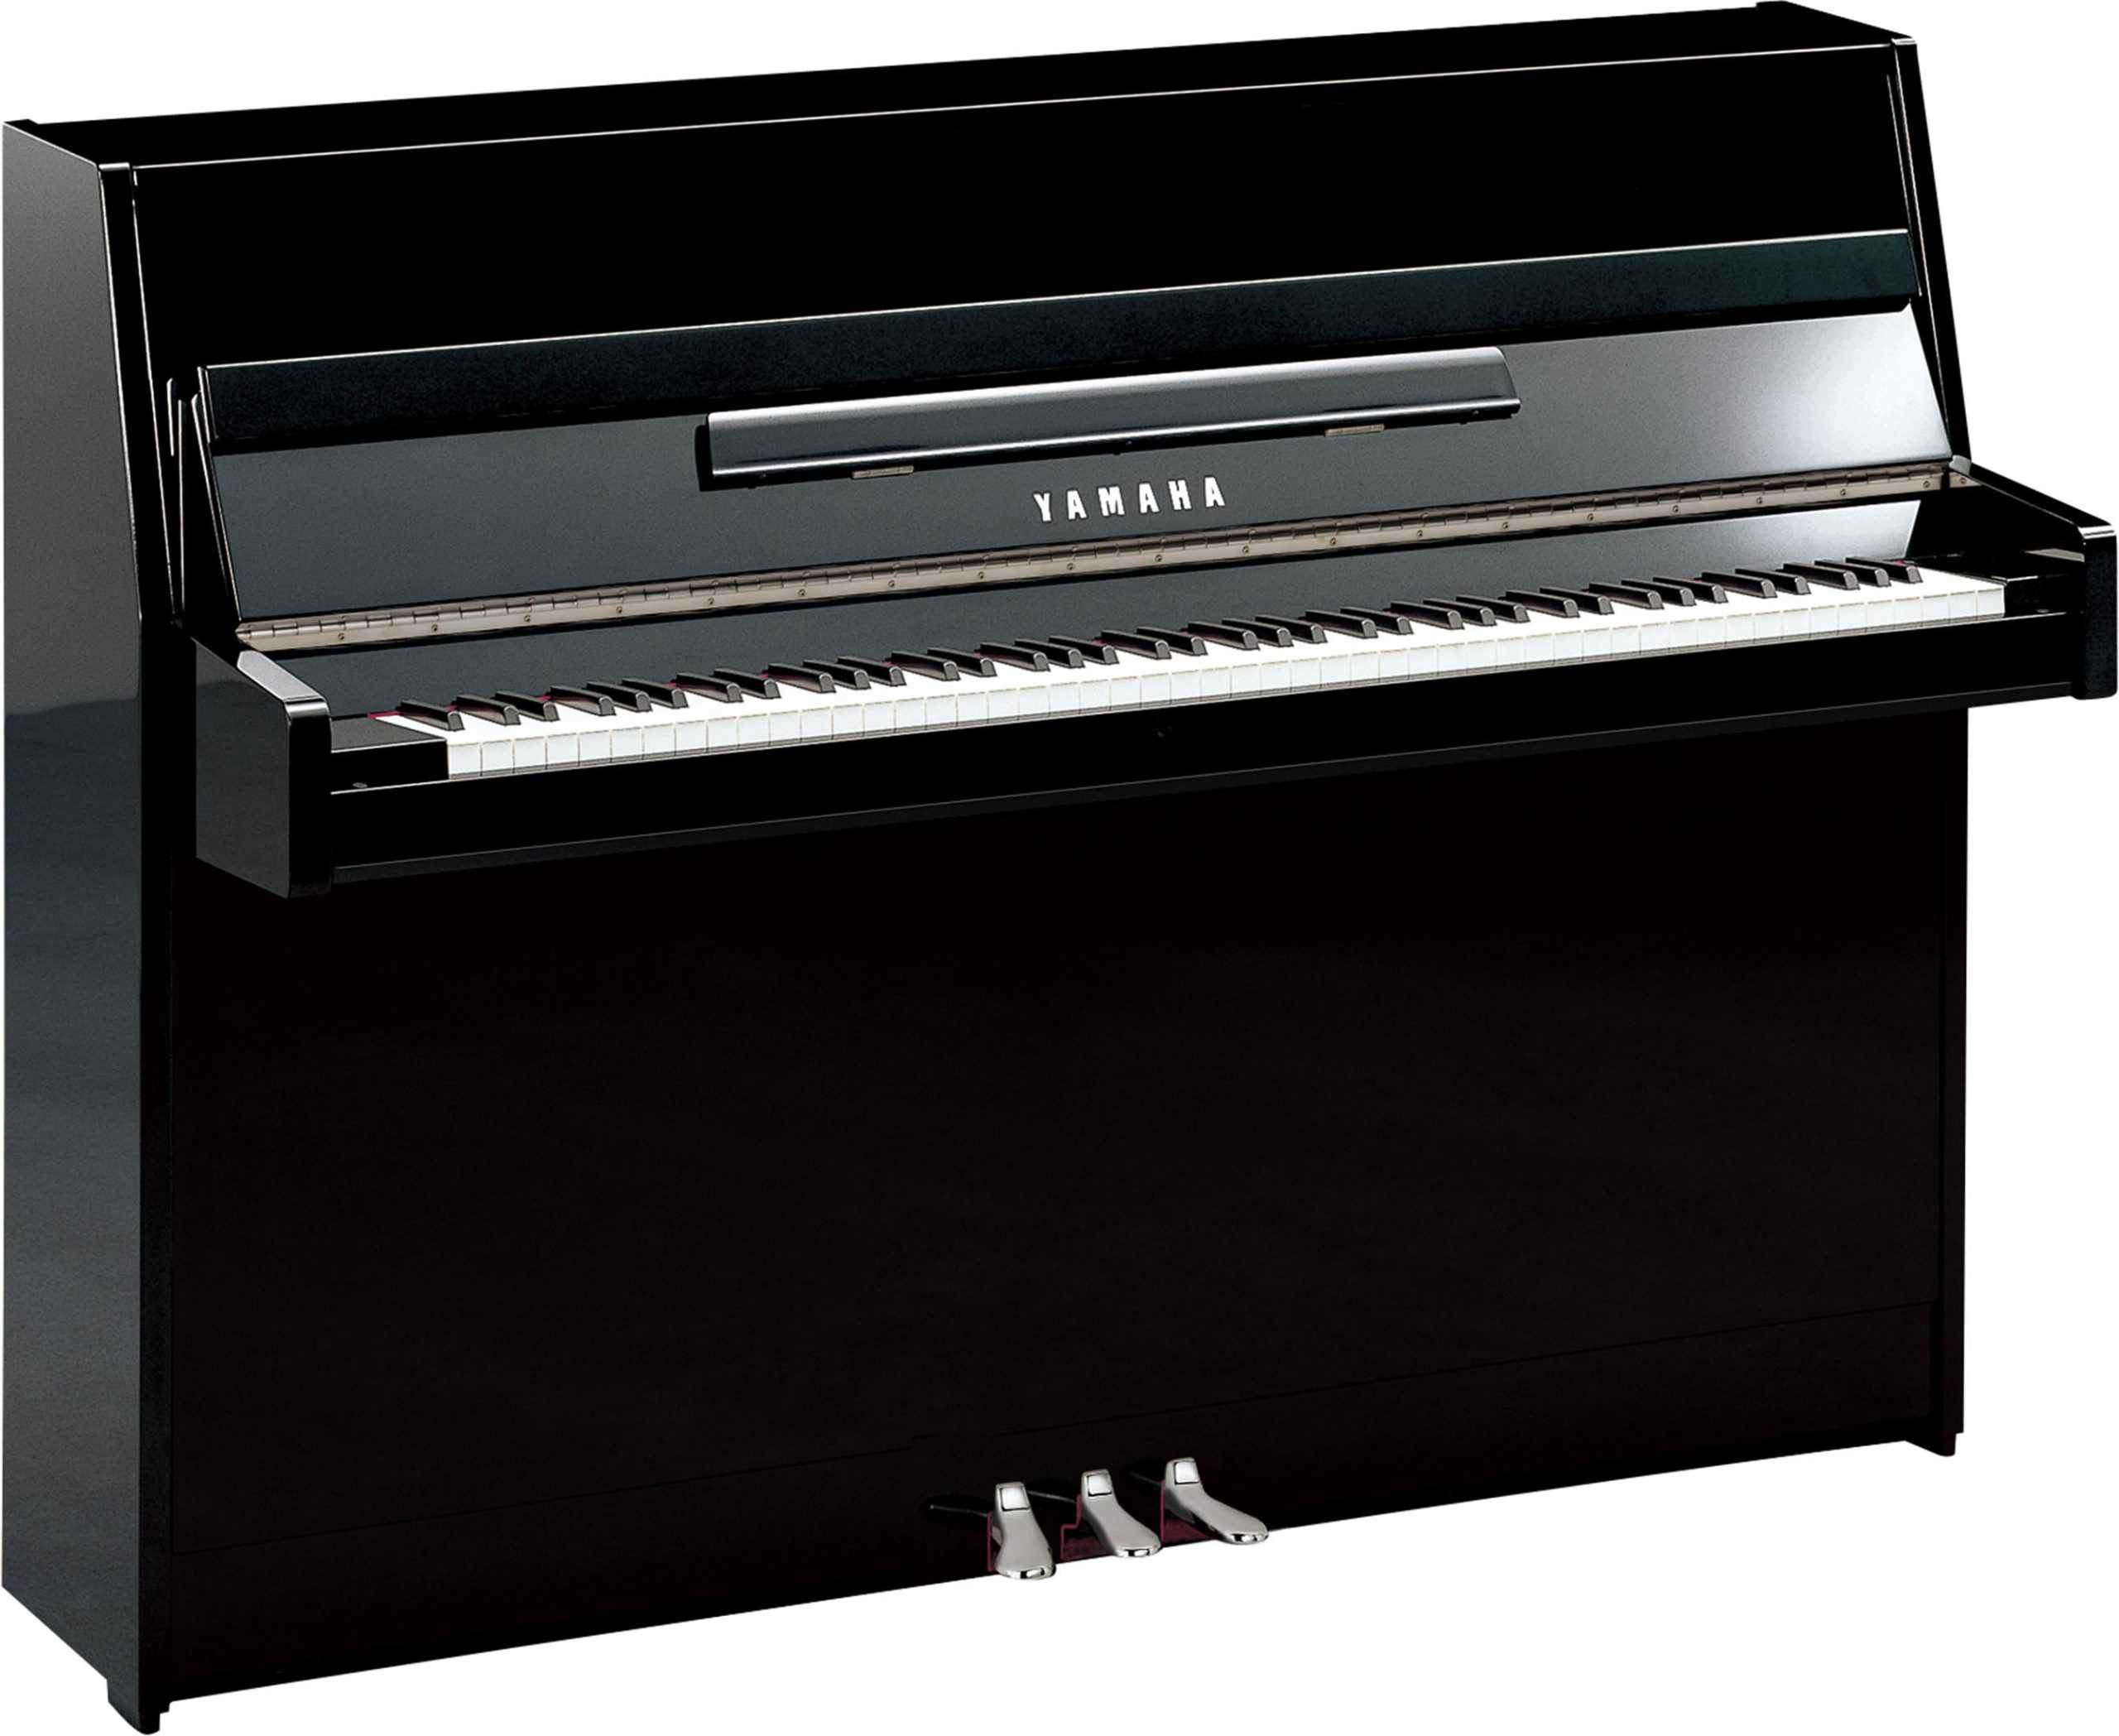 Yamaha B1 Upright Piano in Polished Ebony with Nickel Accents